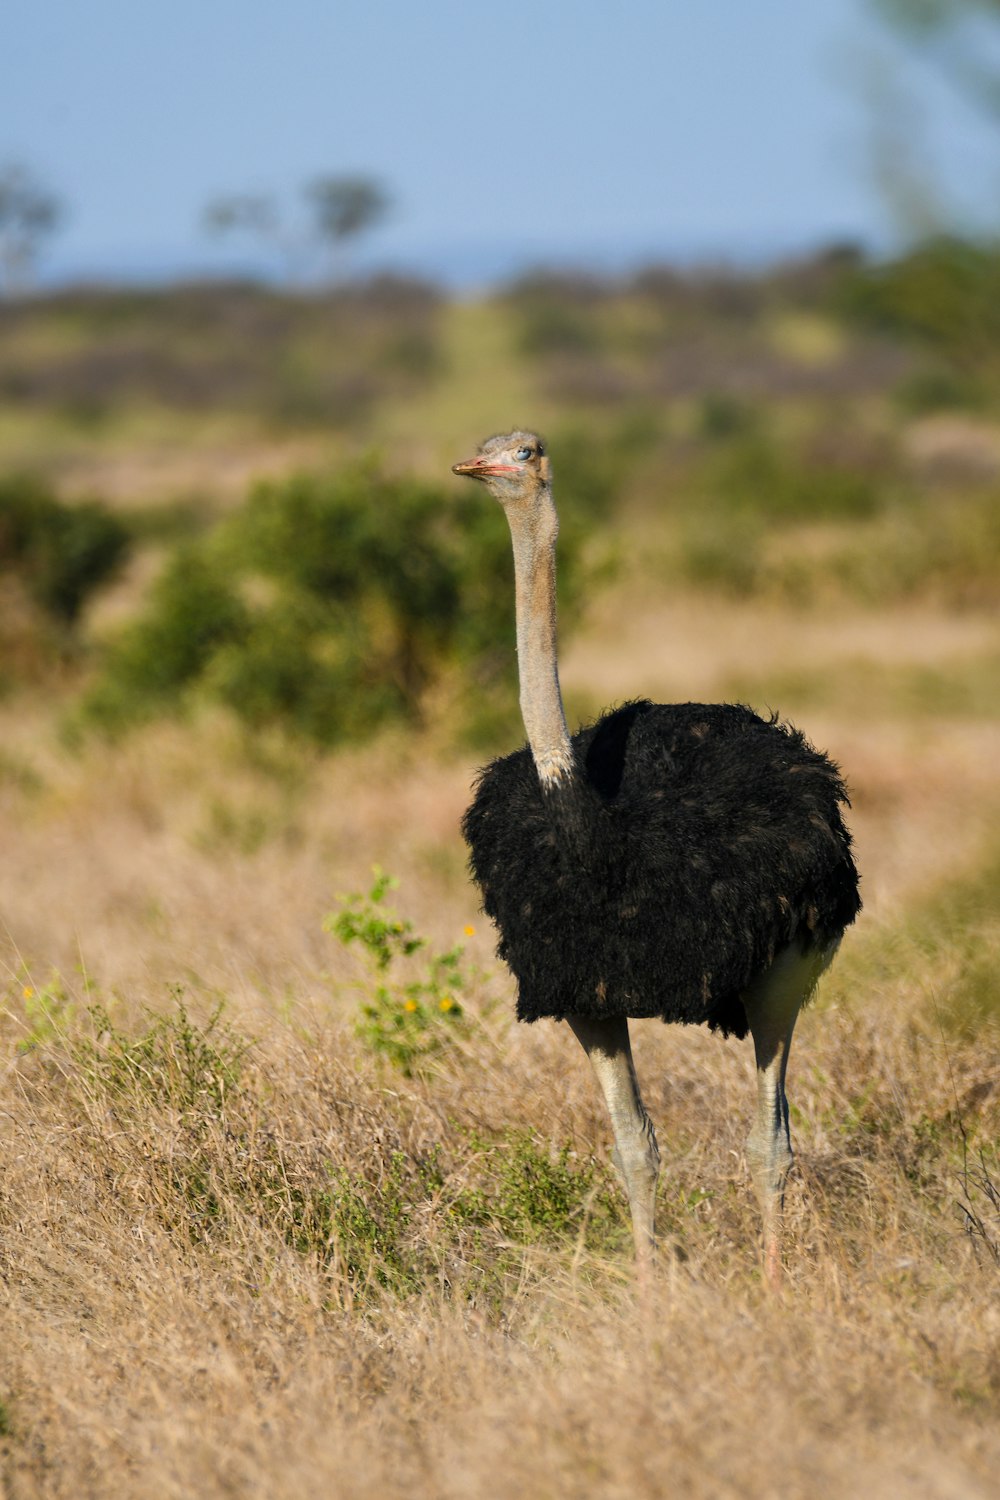 an ostrich standing in a field of dry grass